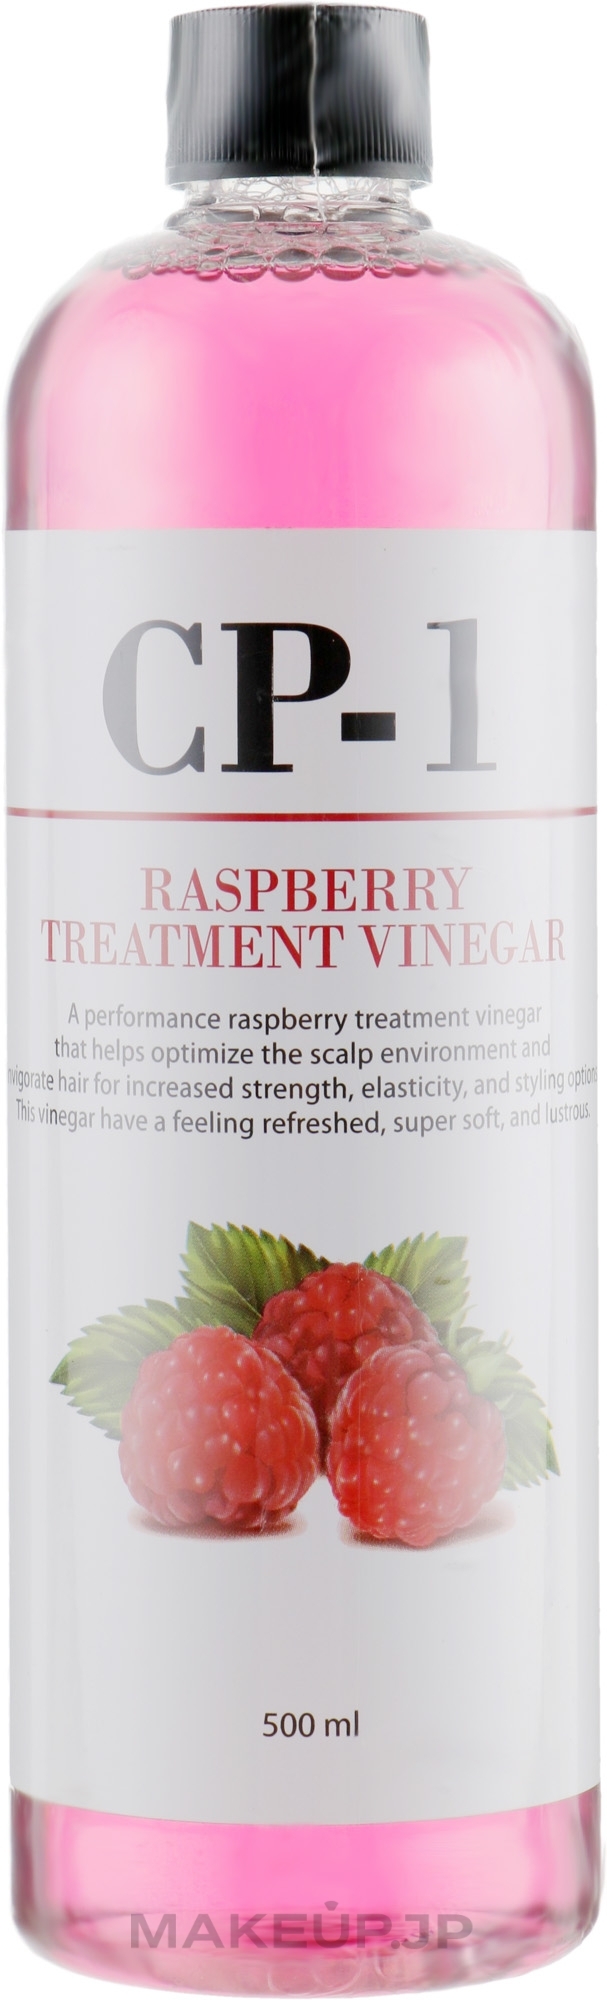 Raspberry Vinegar Conditioner - Esthetic House CP-1 Raspberry Treatment Vinegar — photo 500 ml